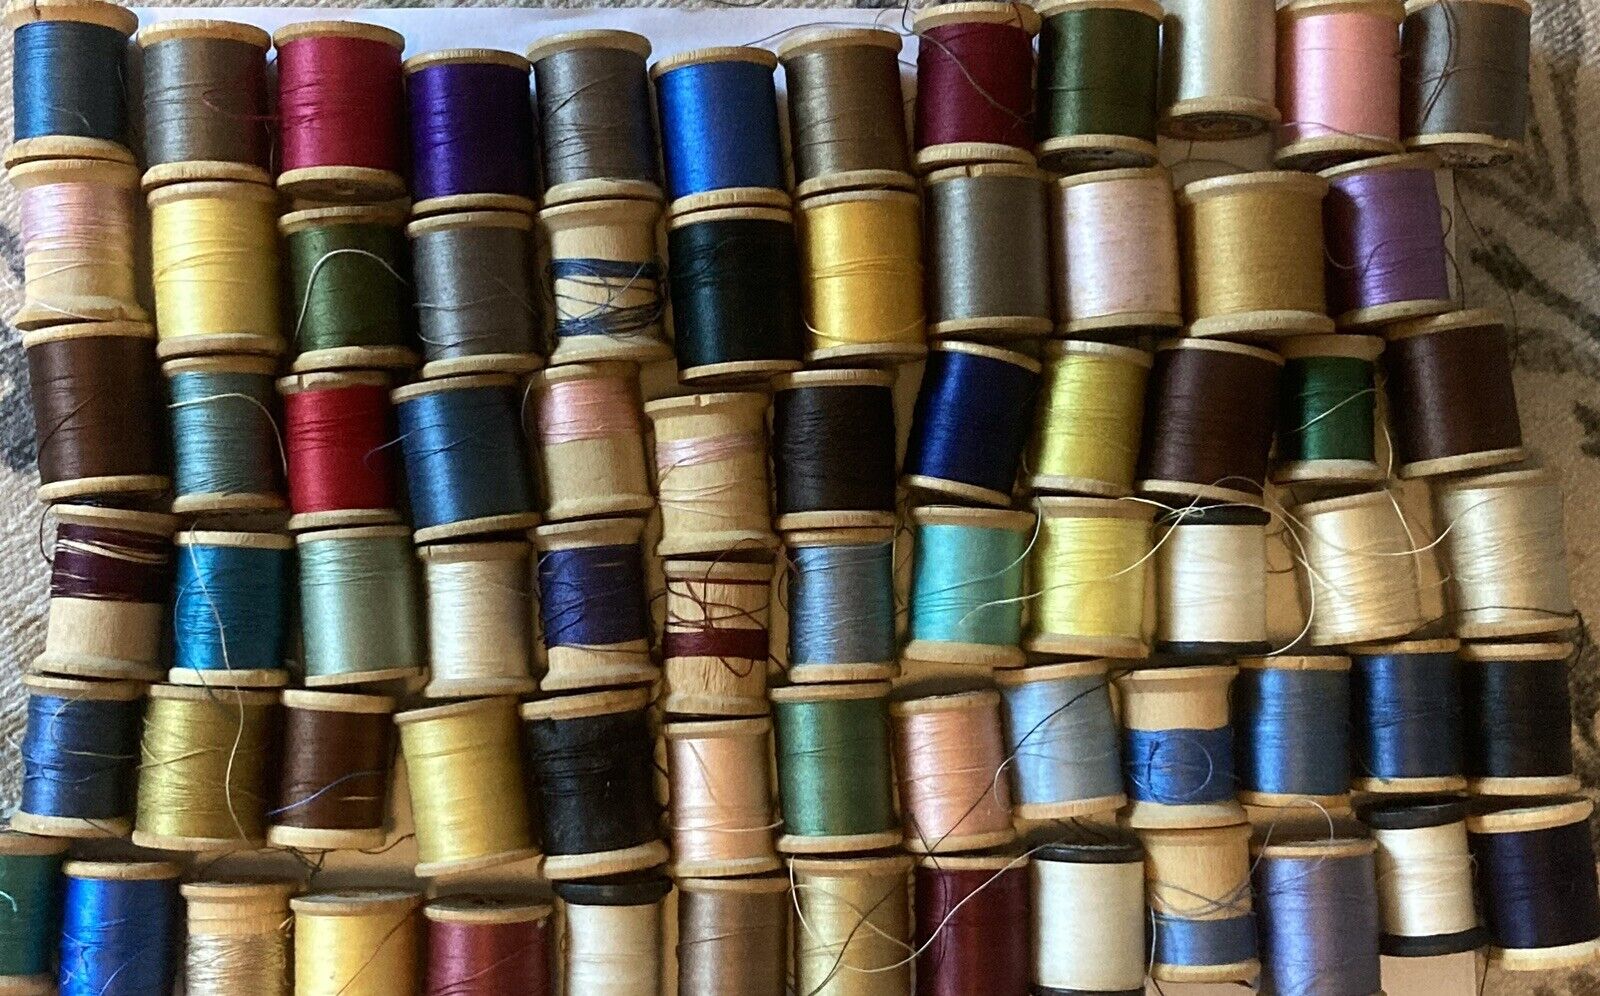 6 Dozen Vintage Wood Spools of Thread Coats and Clark Cotton Various Colors